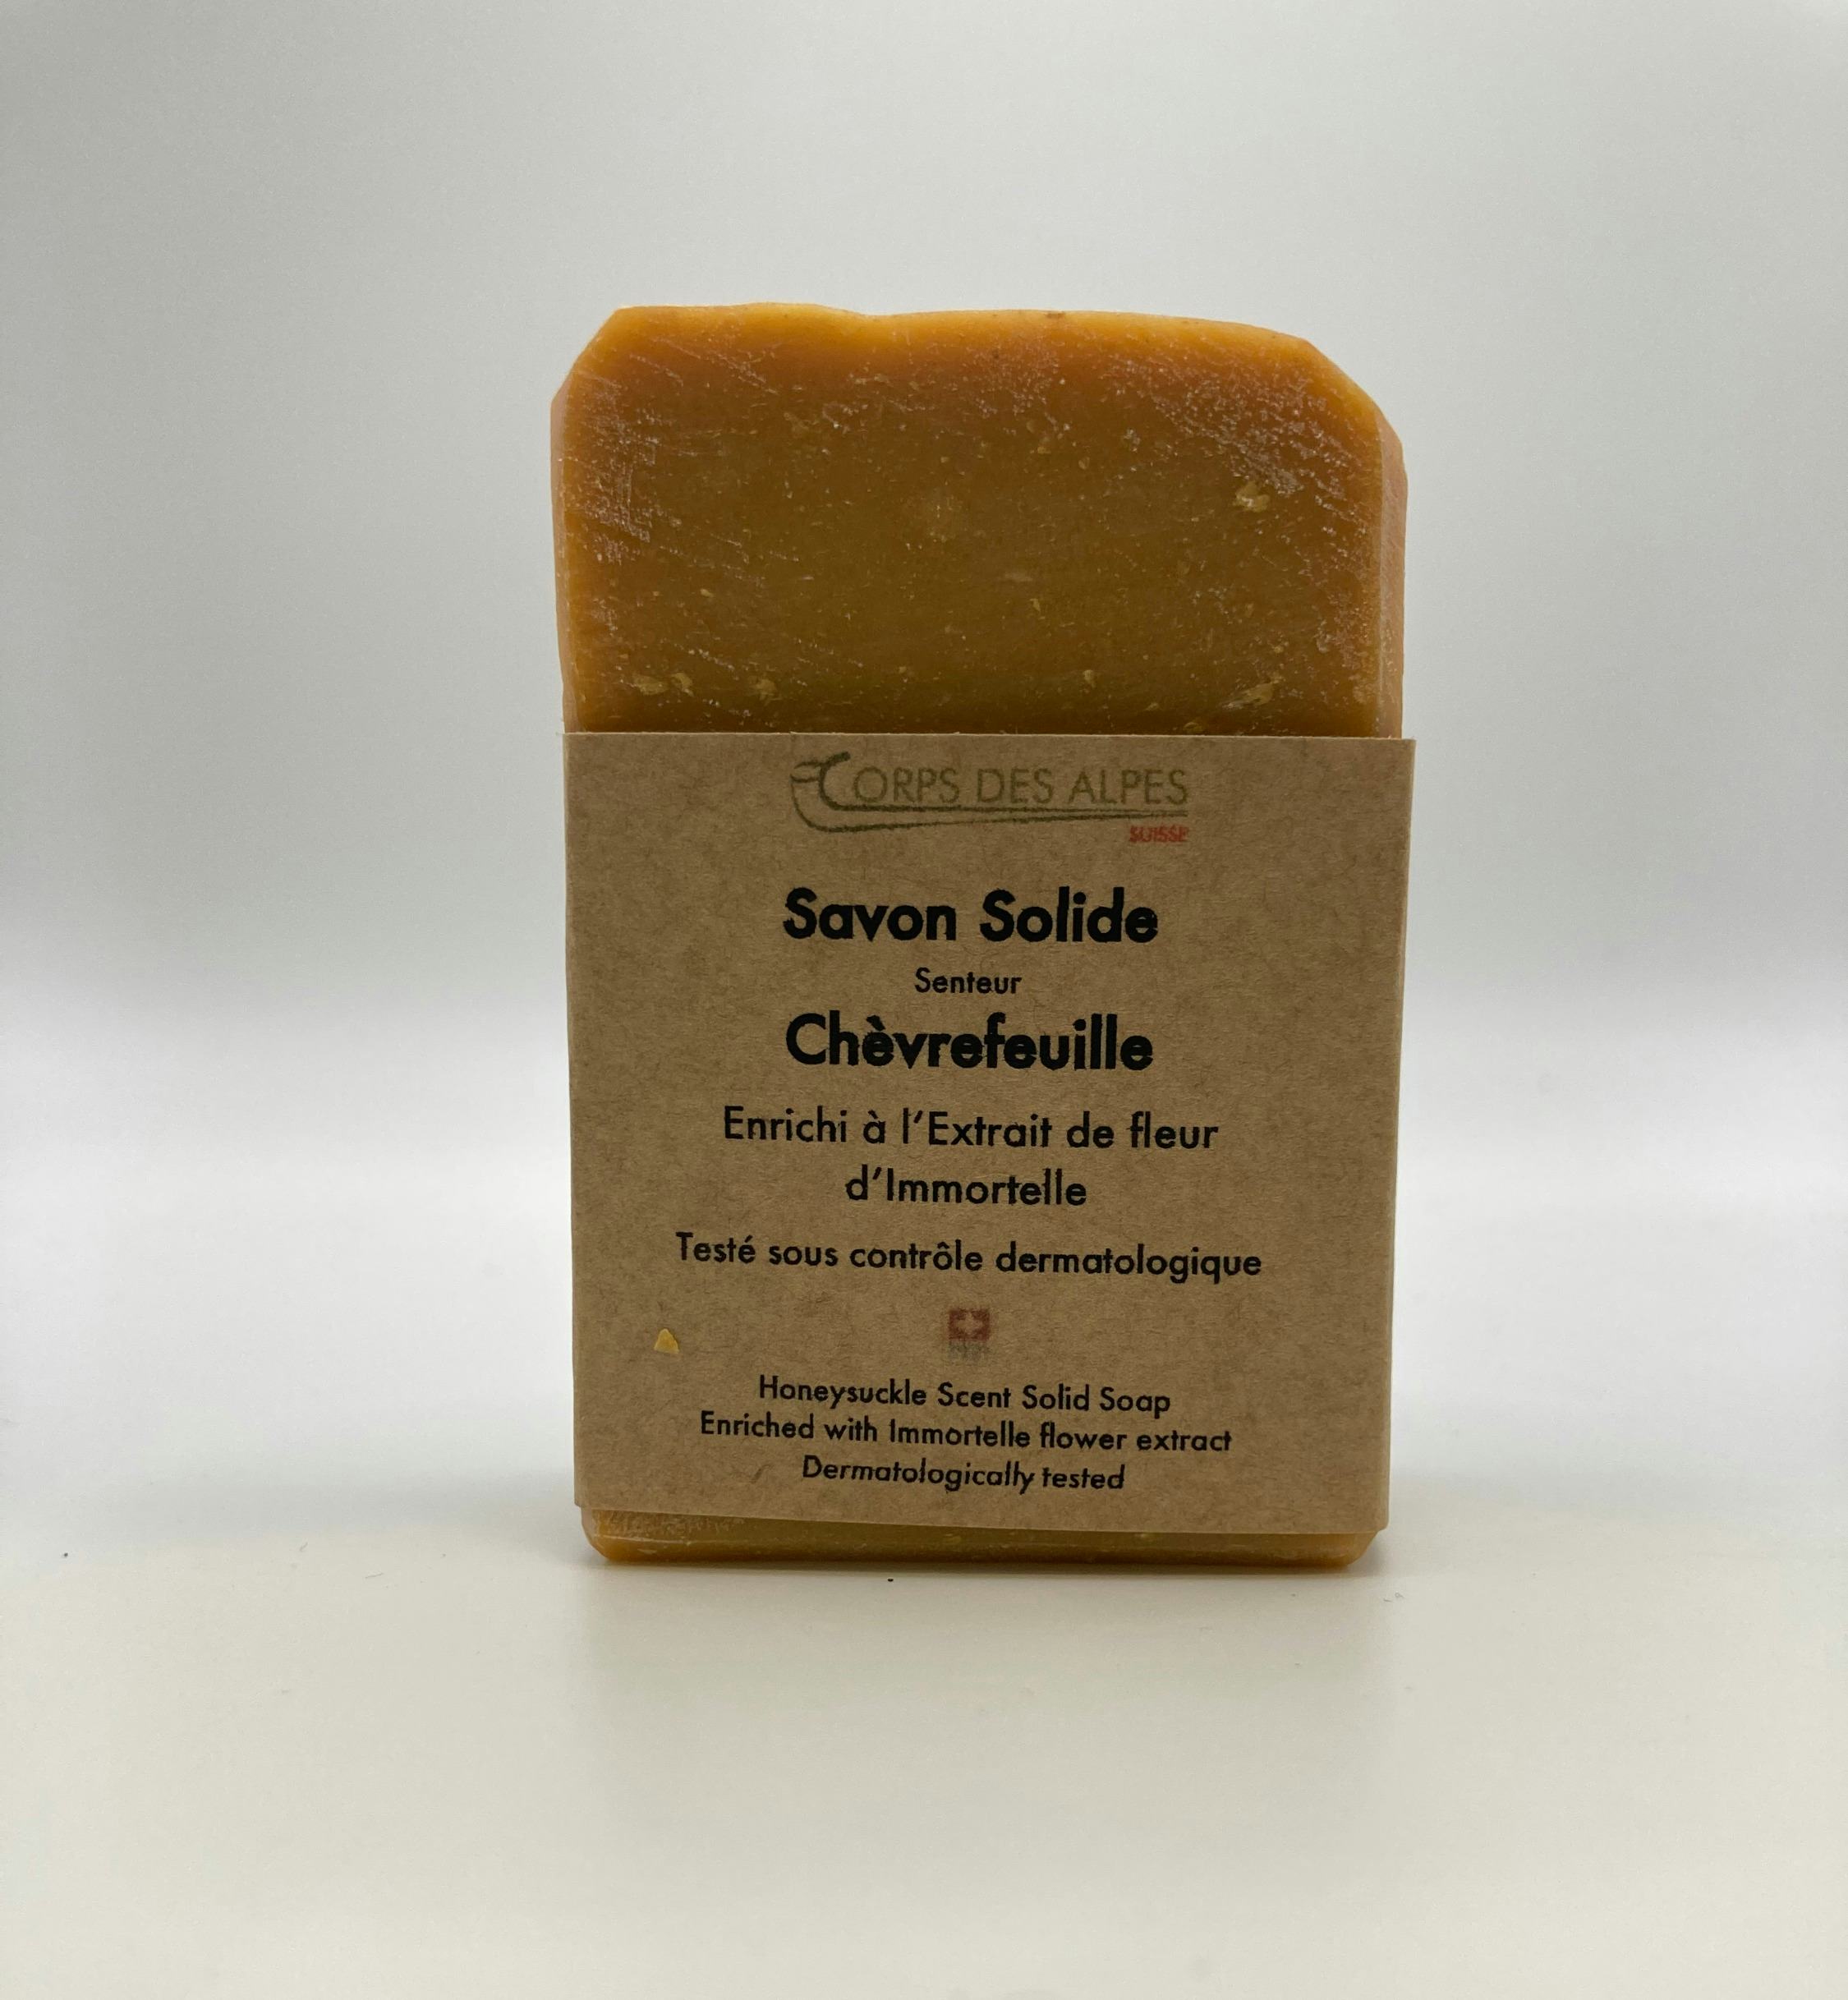 Savon Solide senteur Chèvrefeuille, artisanal product for direct sale in Switzerland